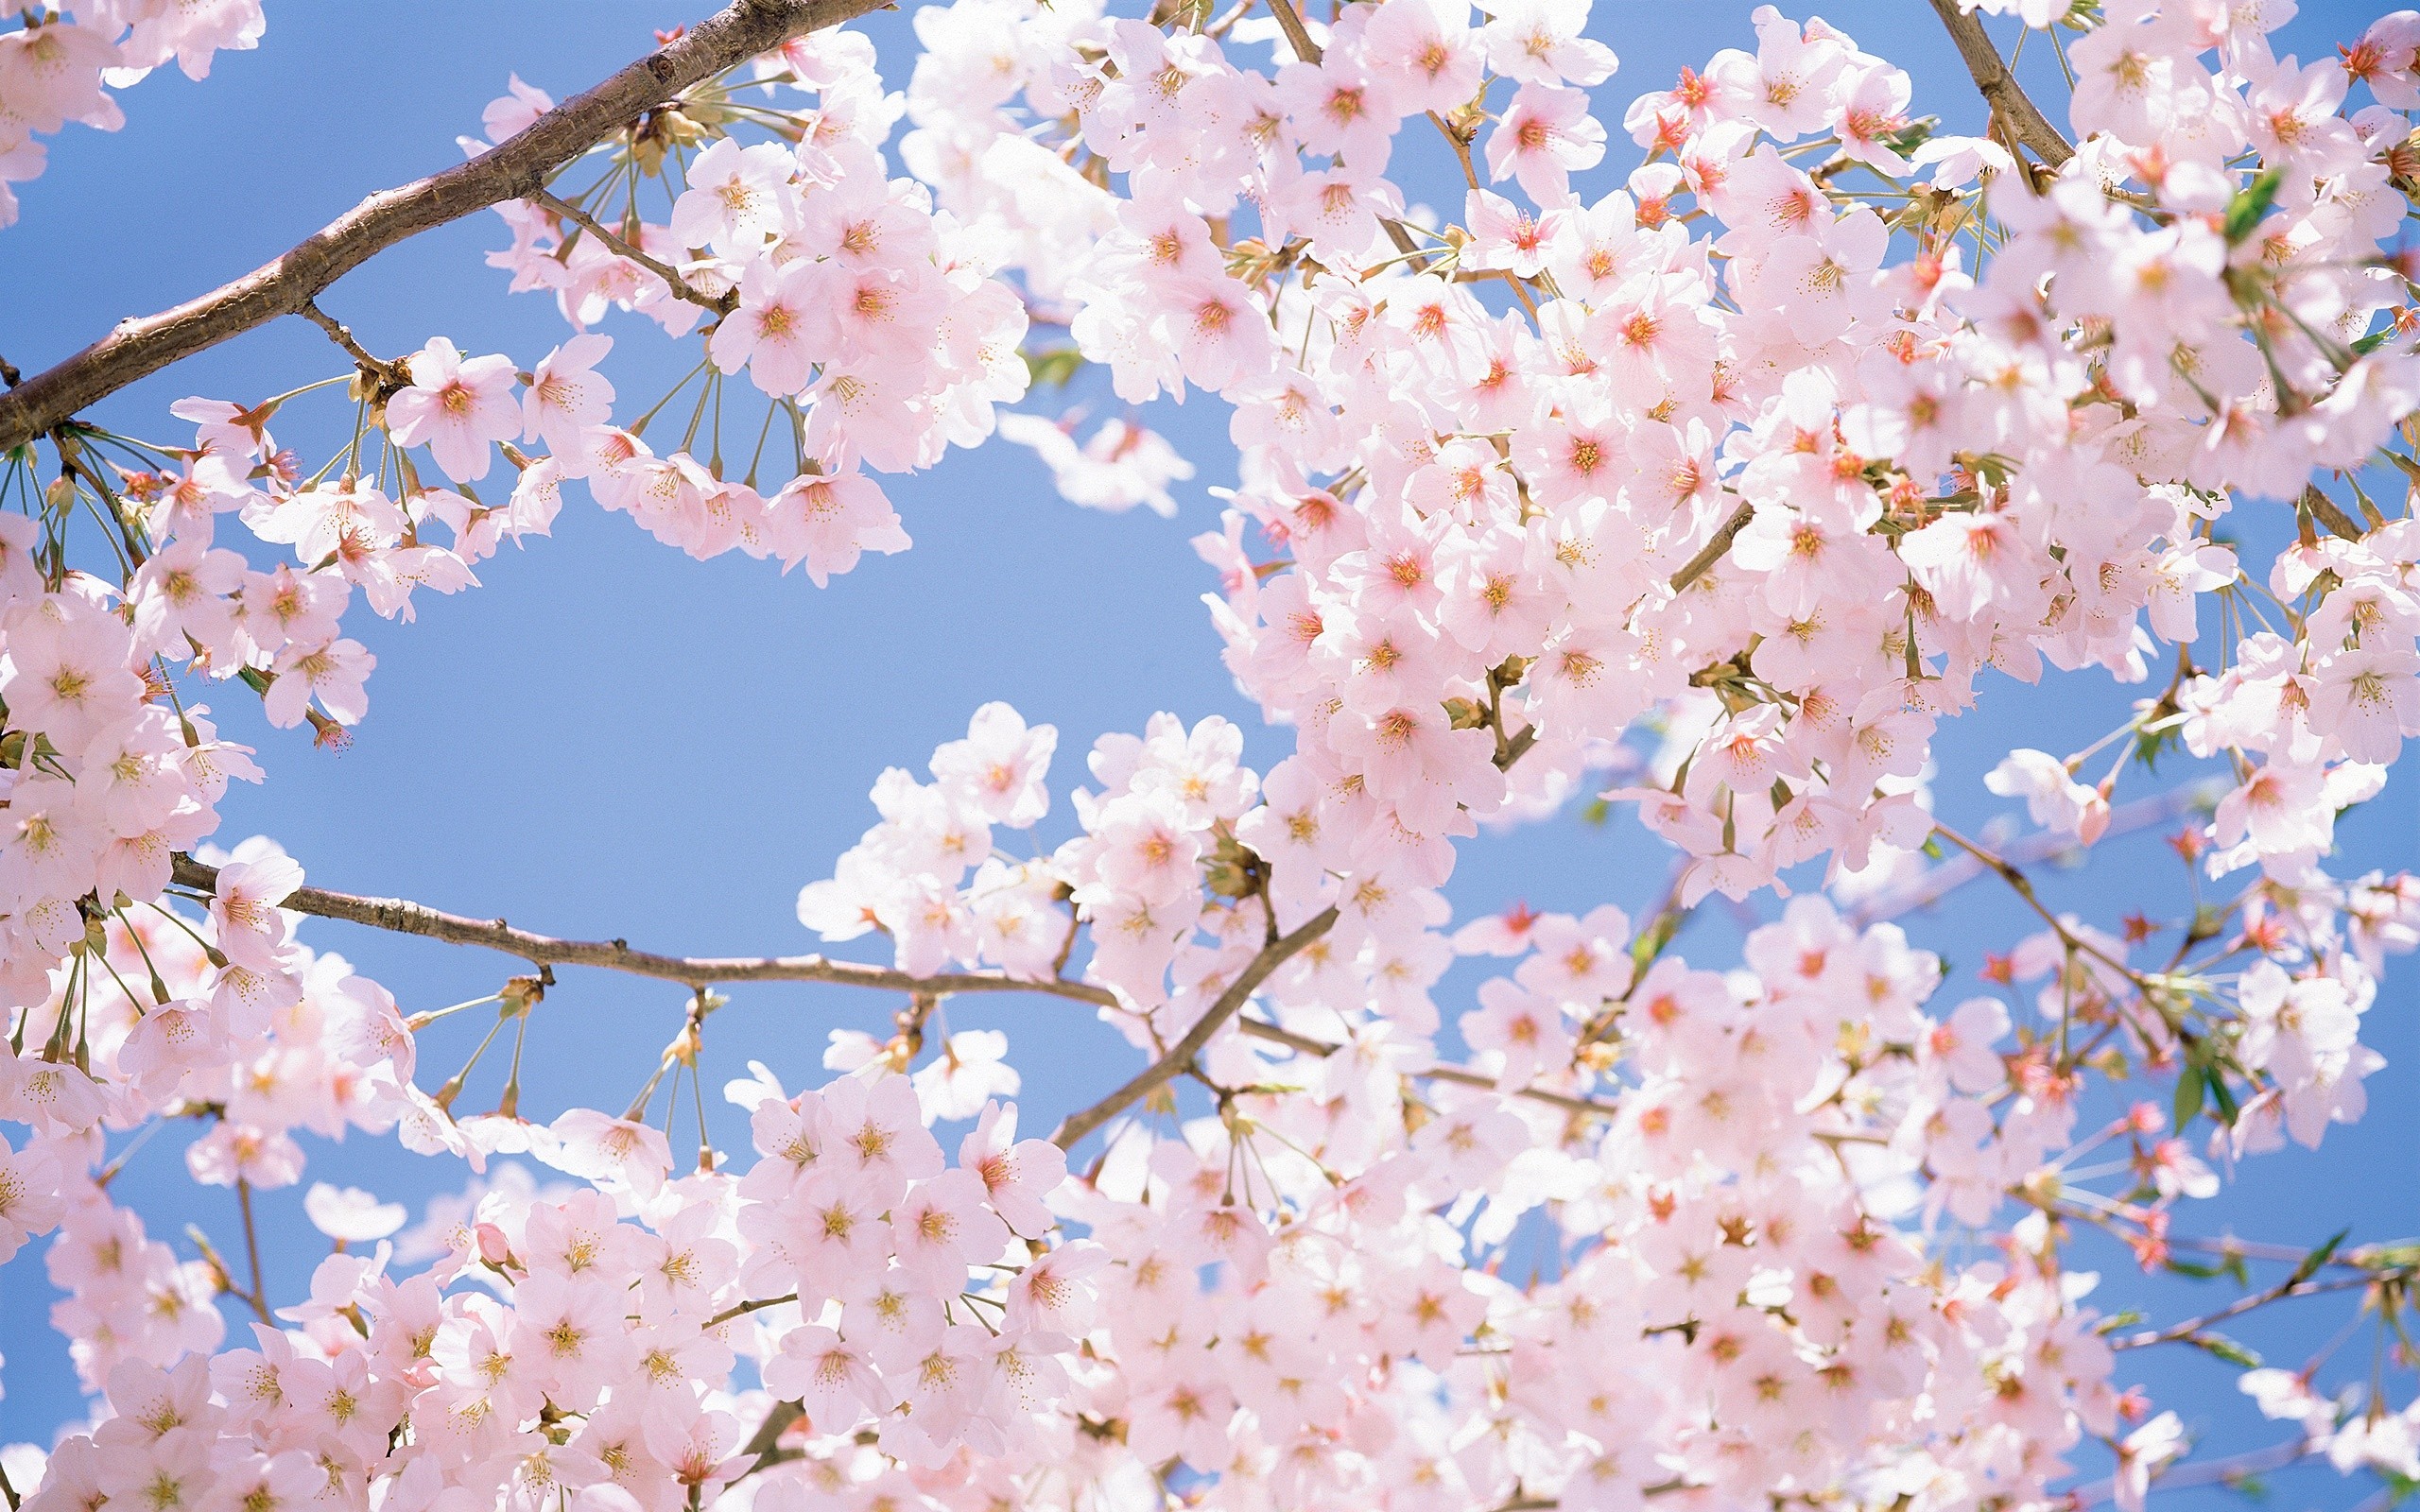 2560x1600 Cherry Blossom Desktop Wallpaper / Cherry Blossom Tree Wallpapers For Pc